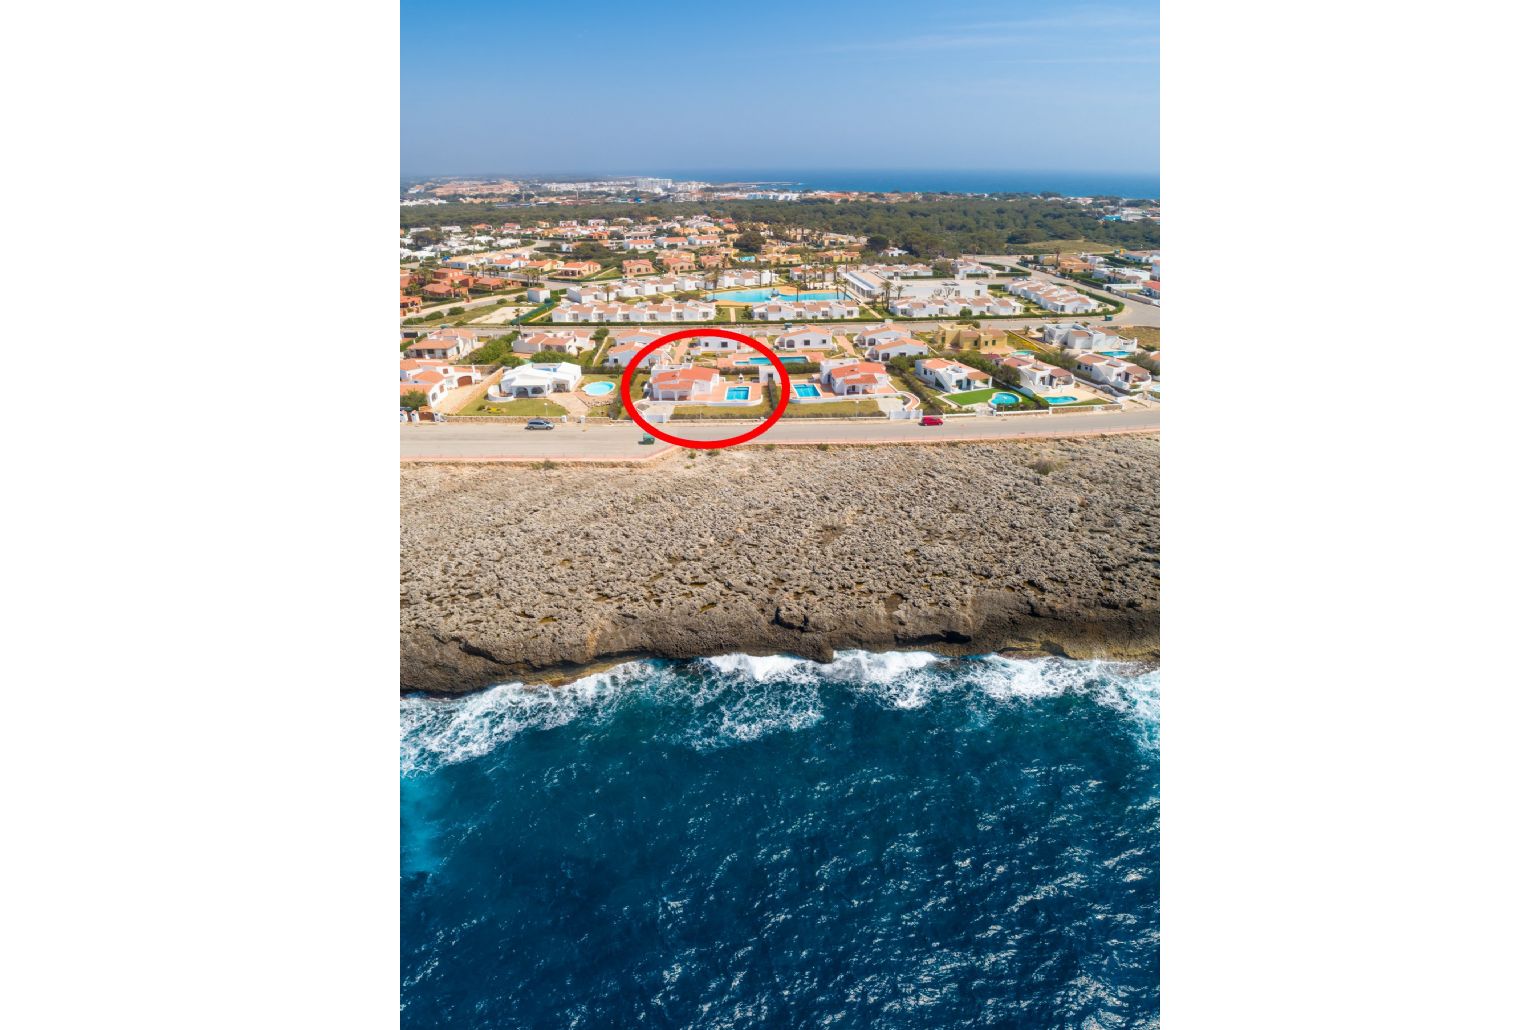 Aerial view showing location of Villa Concha